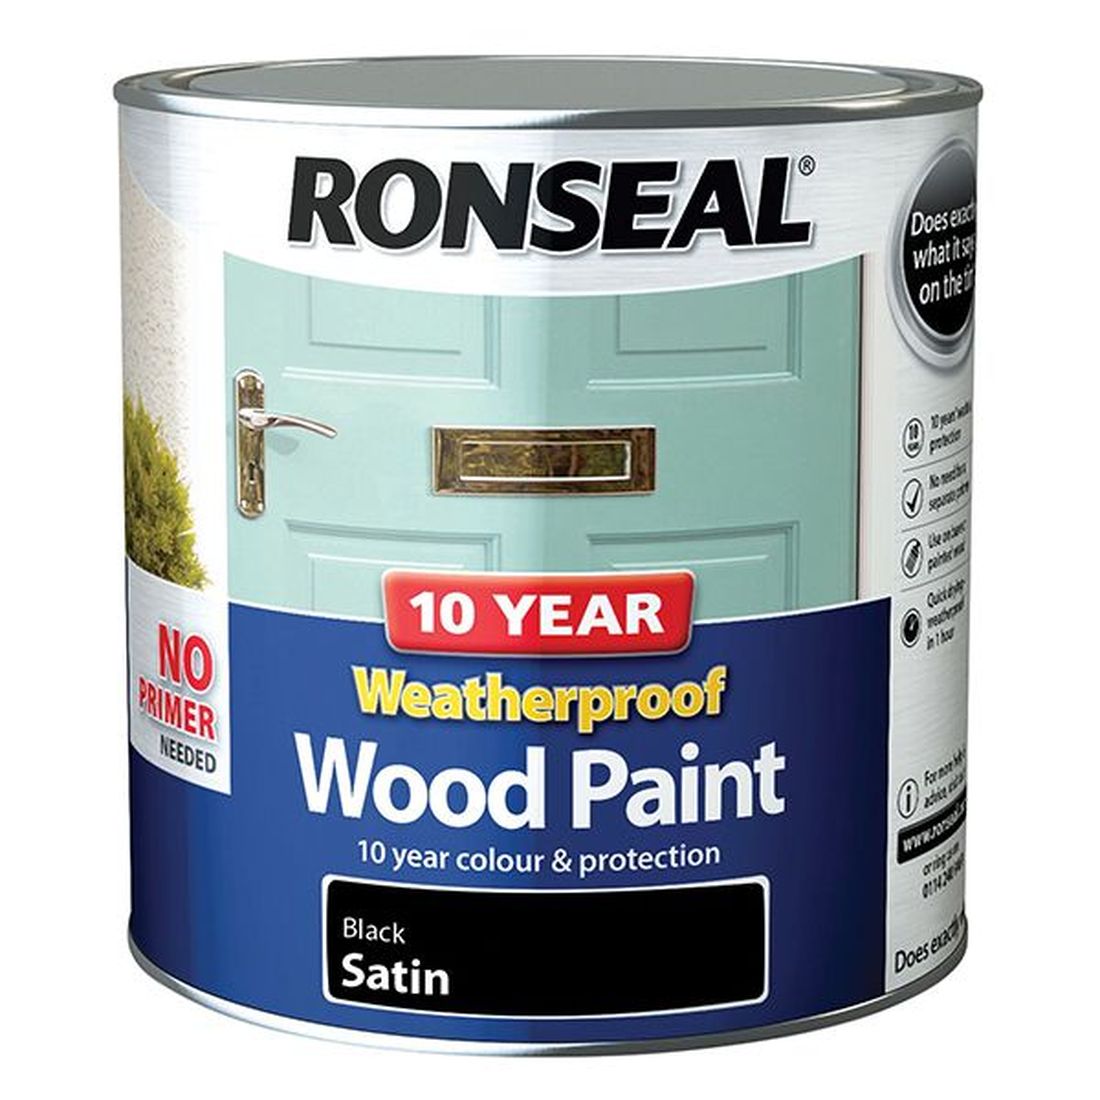 Ronseal 10 Year Weatherproof Wood Paint Black Satin 2.5 litre                           